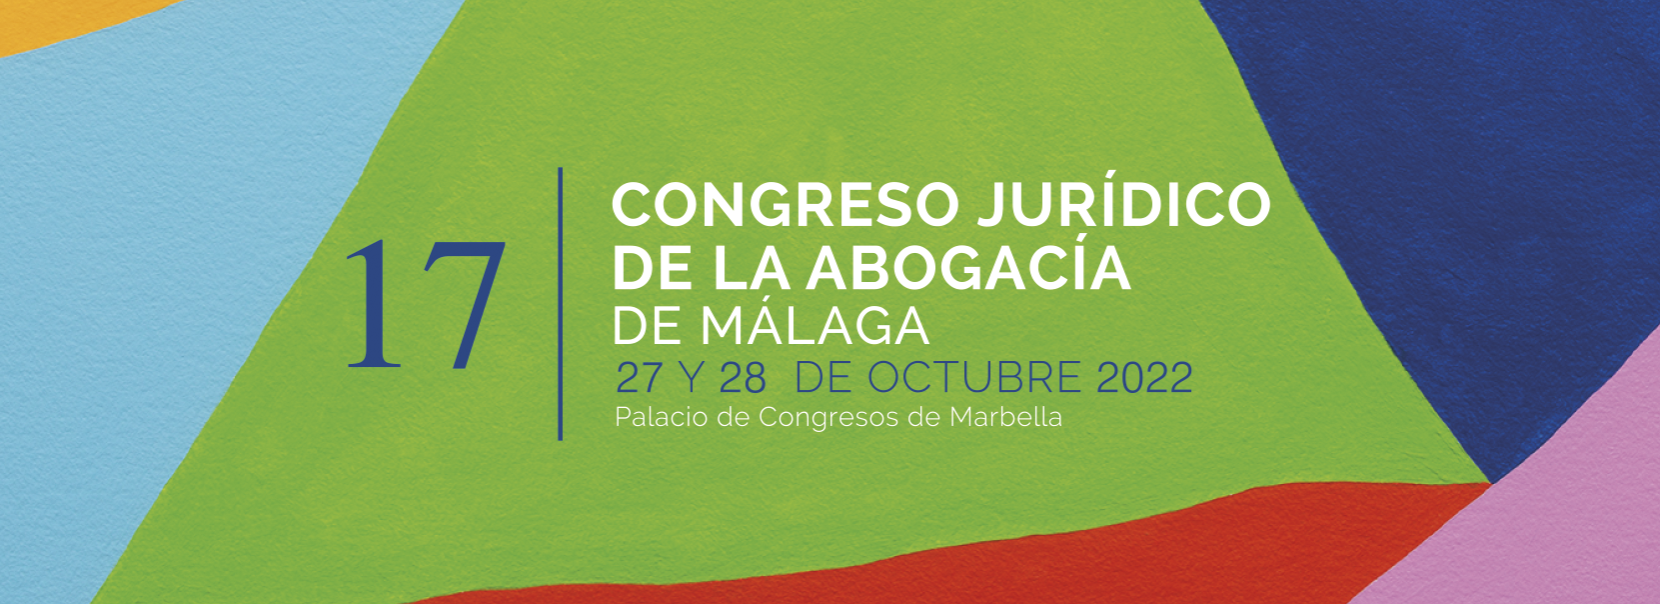 XVII Congreso Jurídico de la Abogacía de Málaga